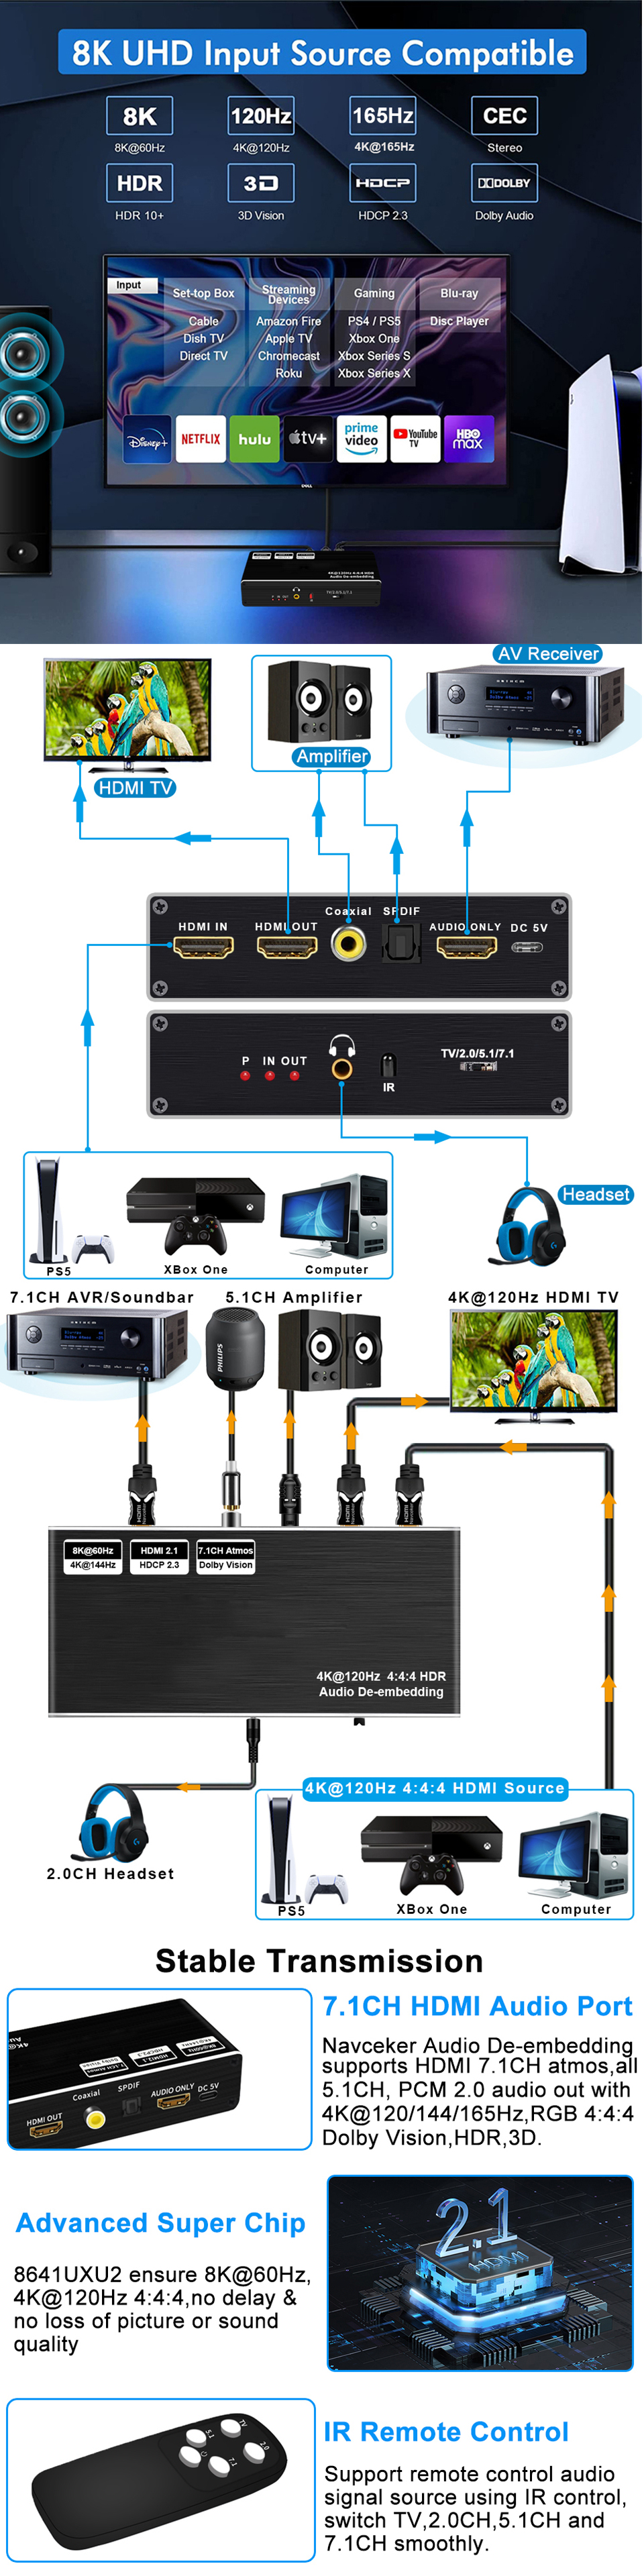 Jansicotek 8K@60Hz HDMI Audio Extractor with 7.1CH Atmos, HDMI to